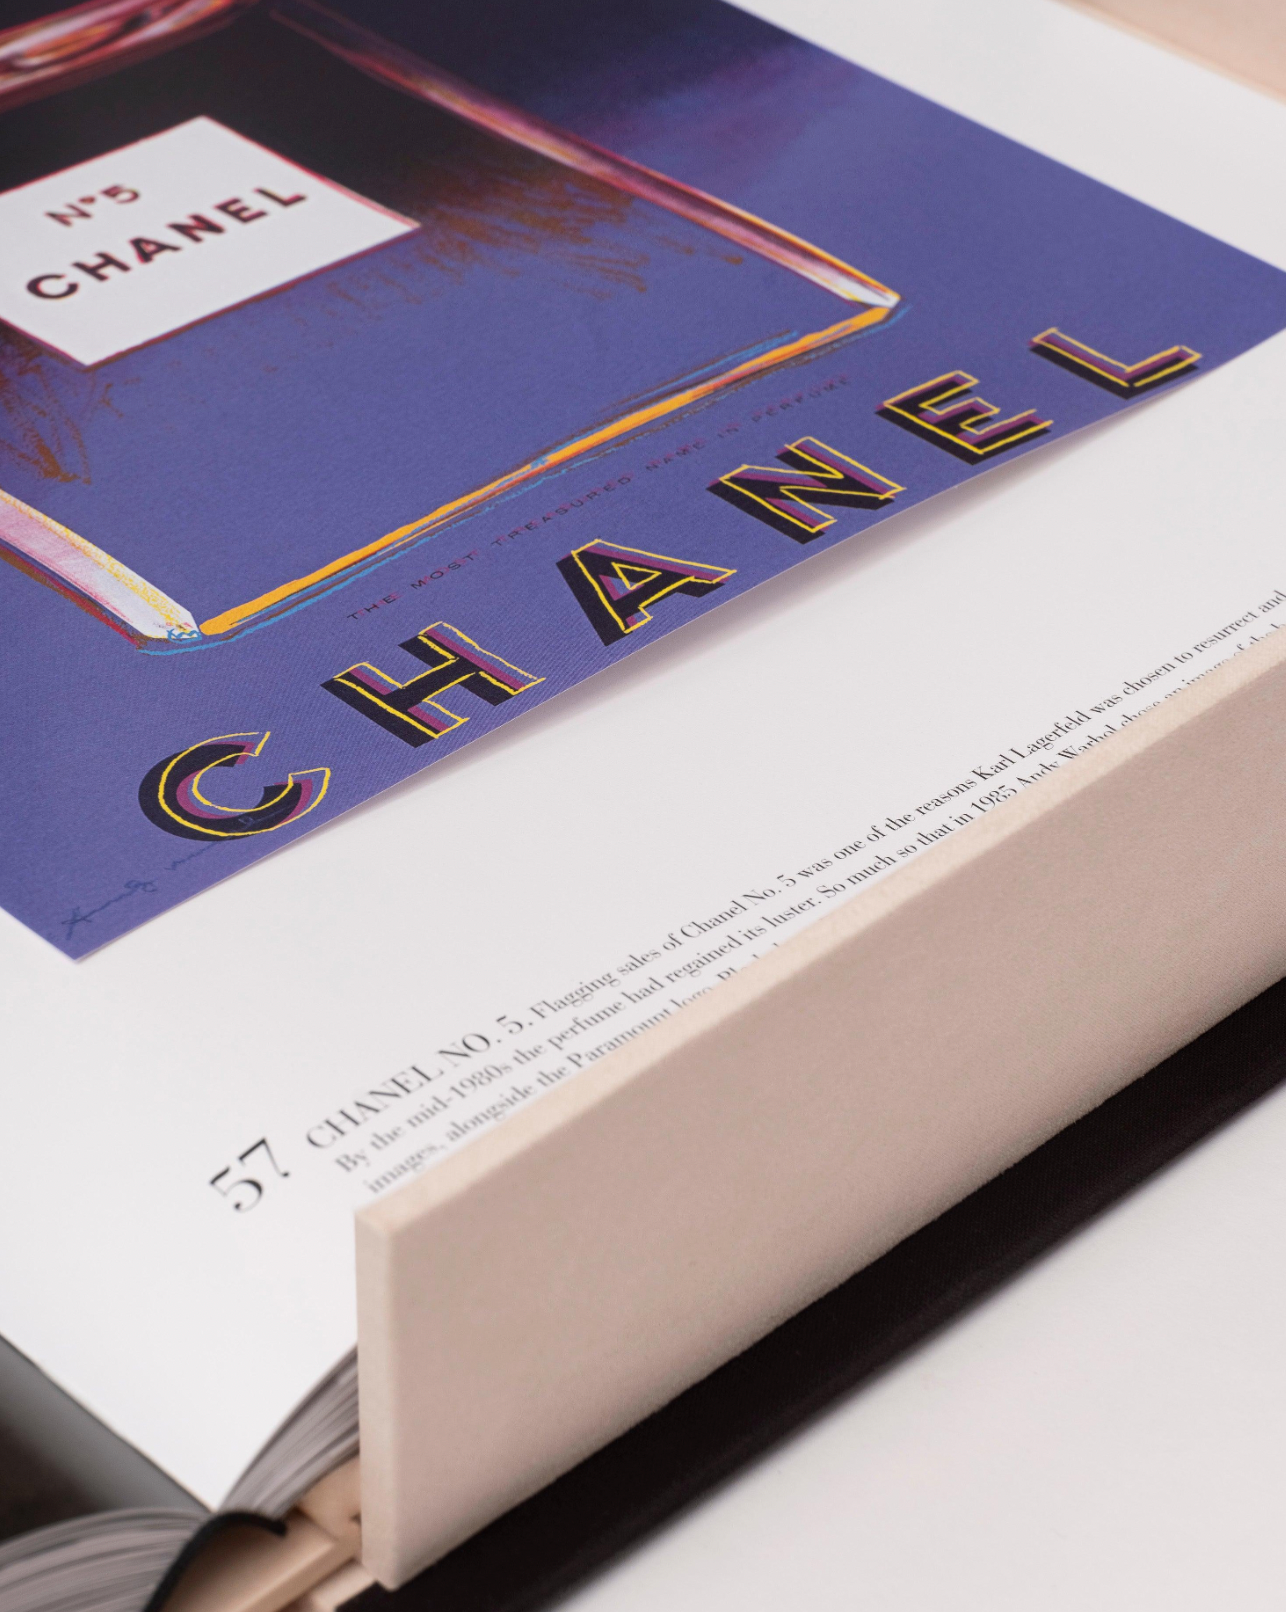 Chanel: Kolekcja niemożliwa